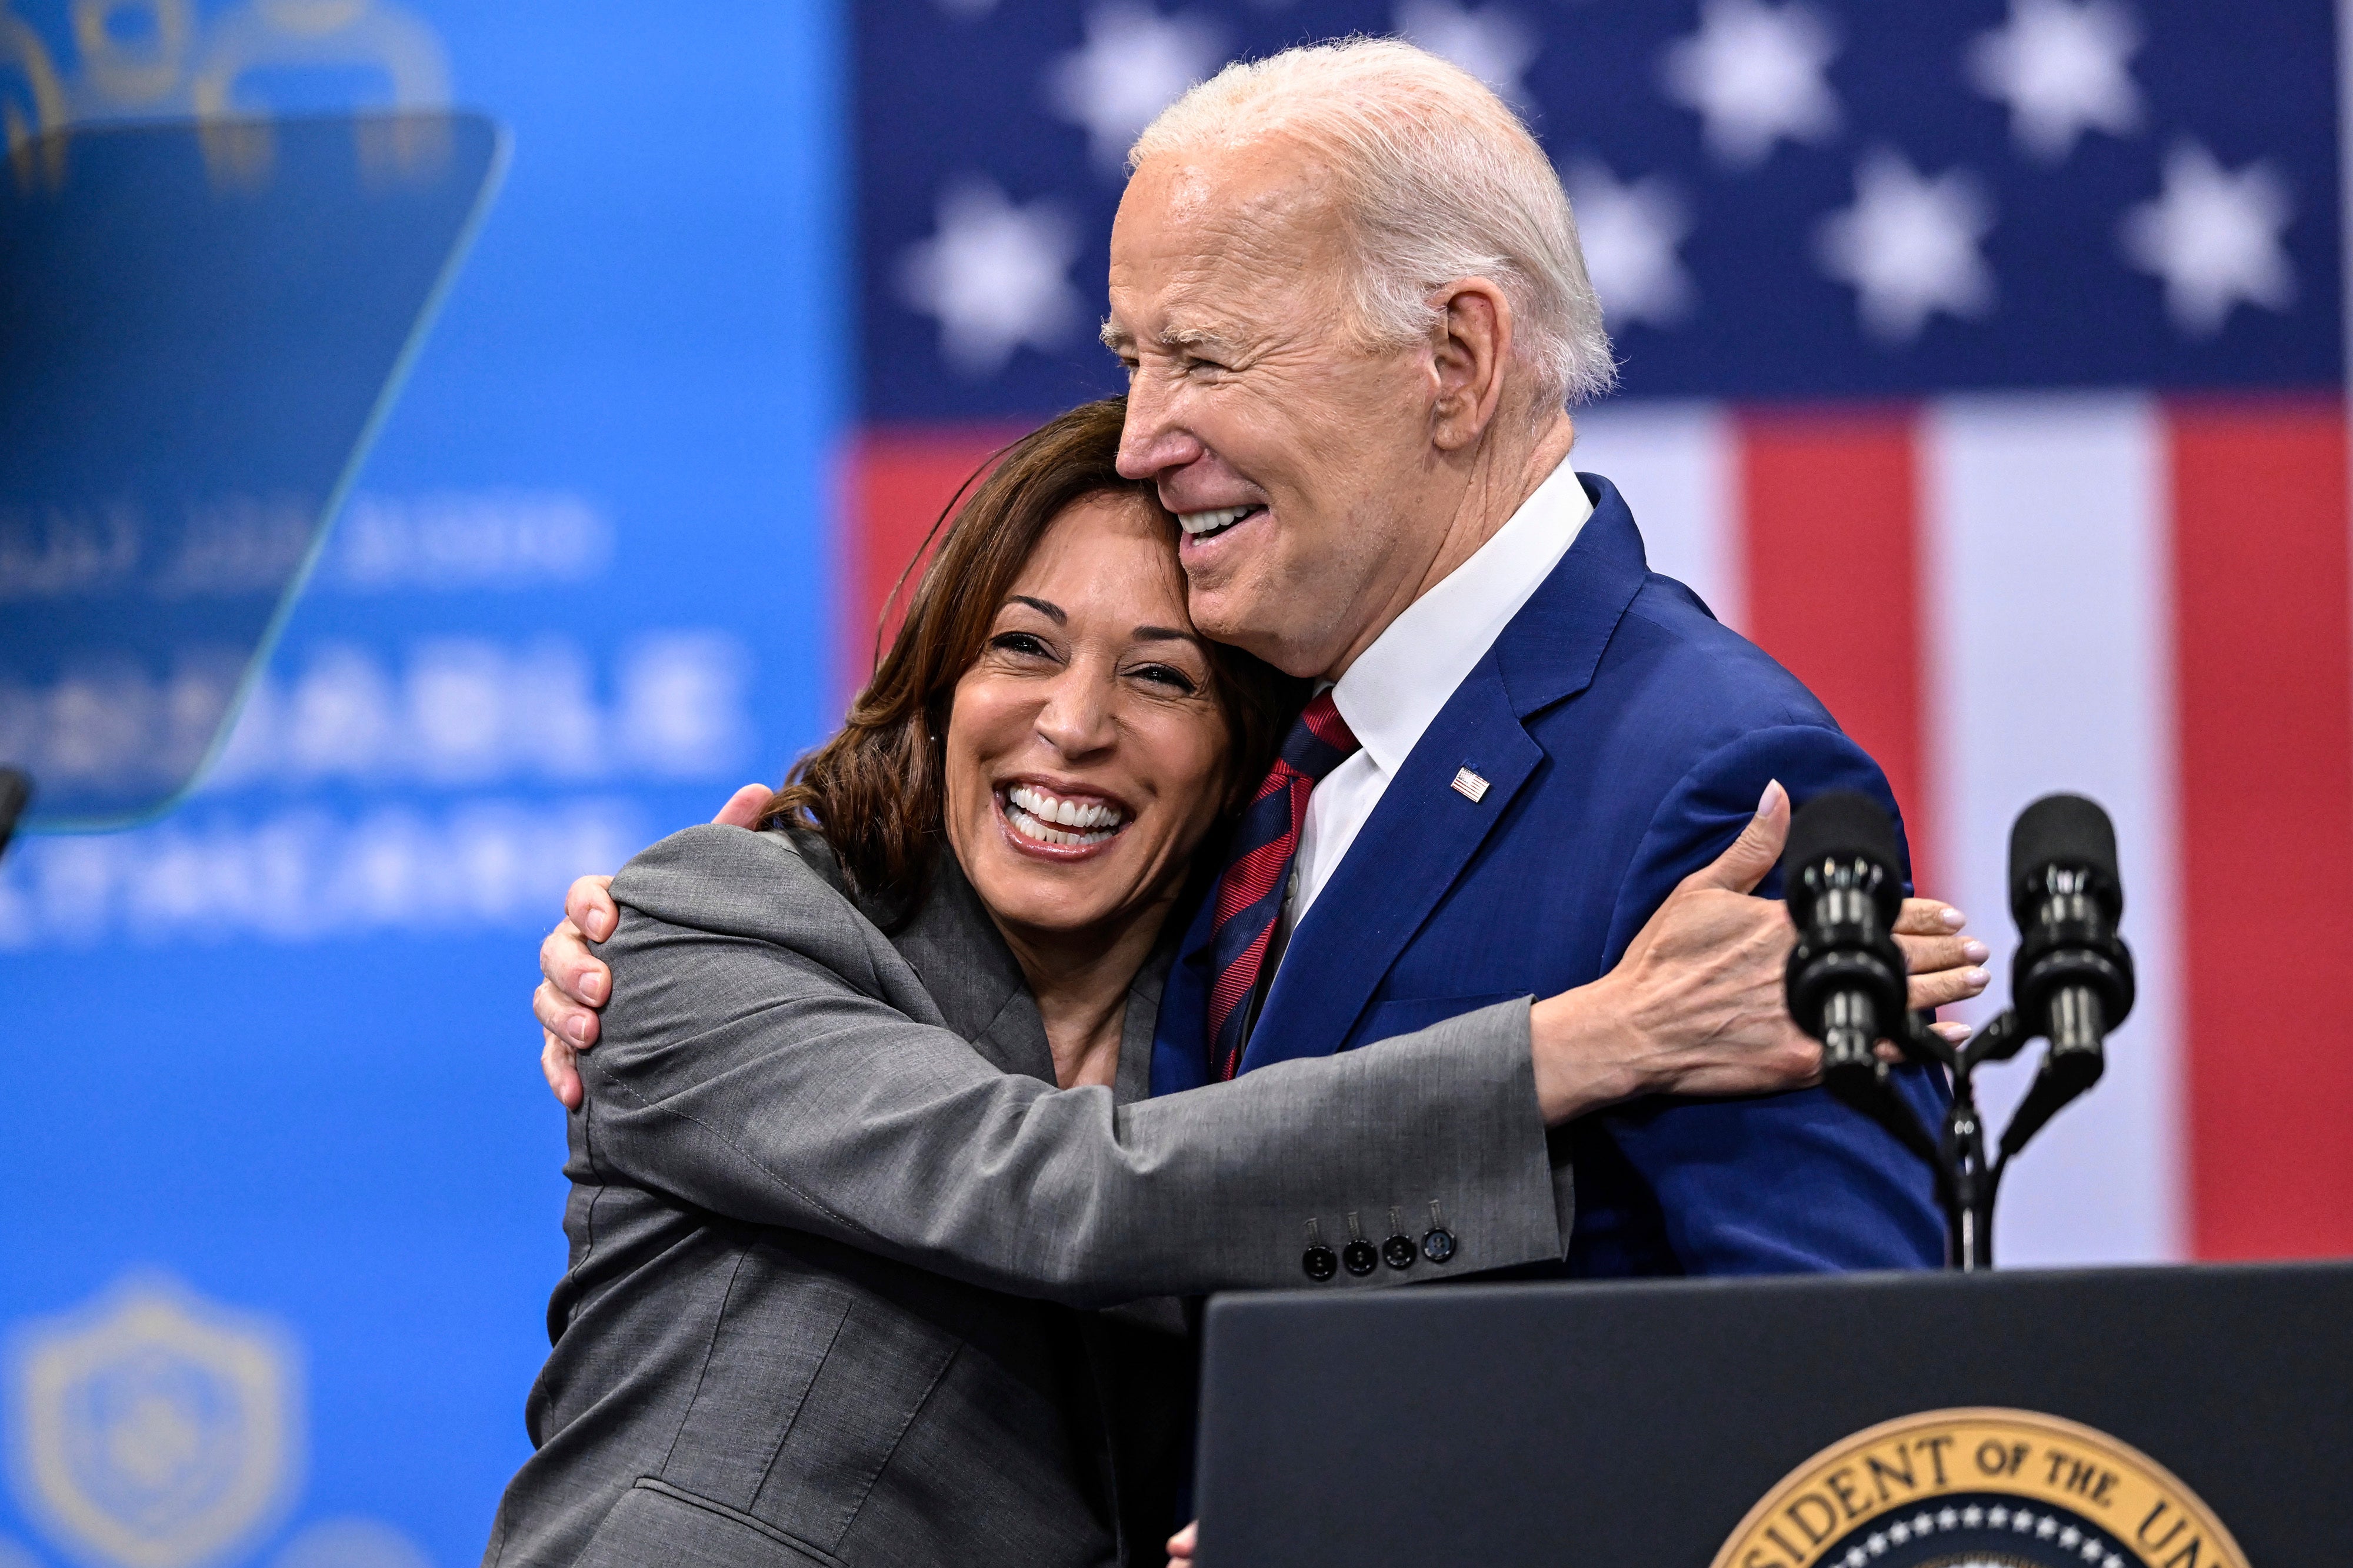 Vice President Kamala Harris embraces President Joe Biden after a speech on healthcare in North Carolina on March 26.